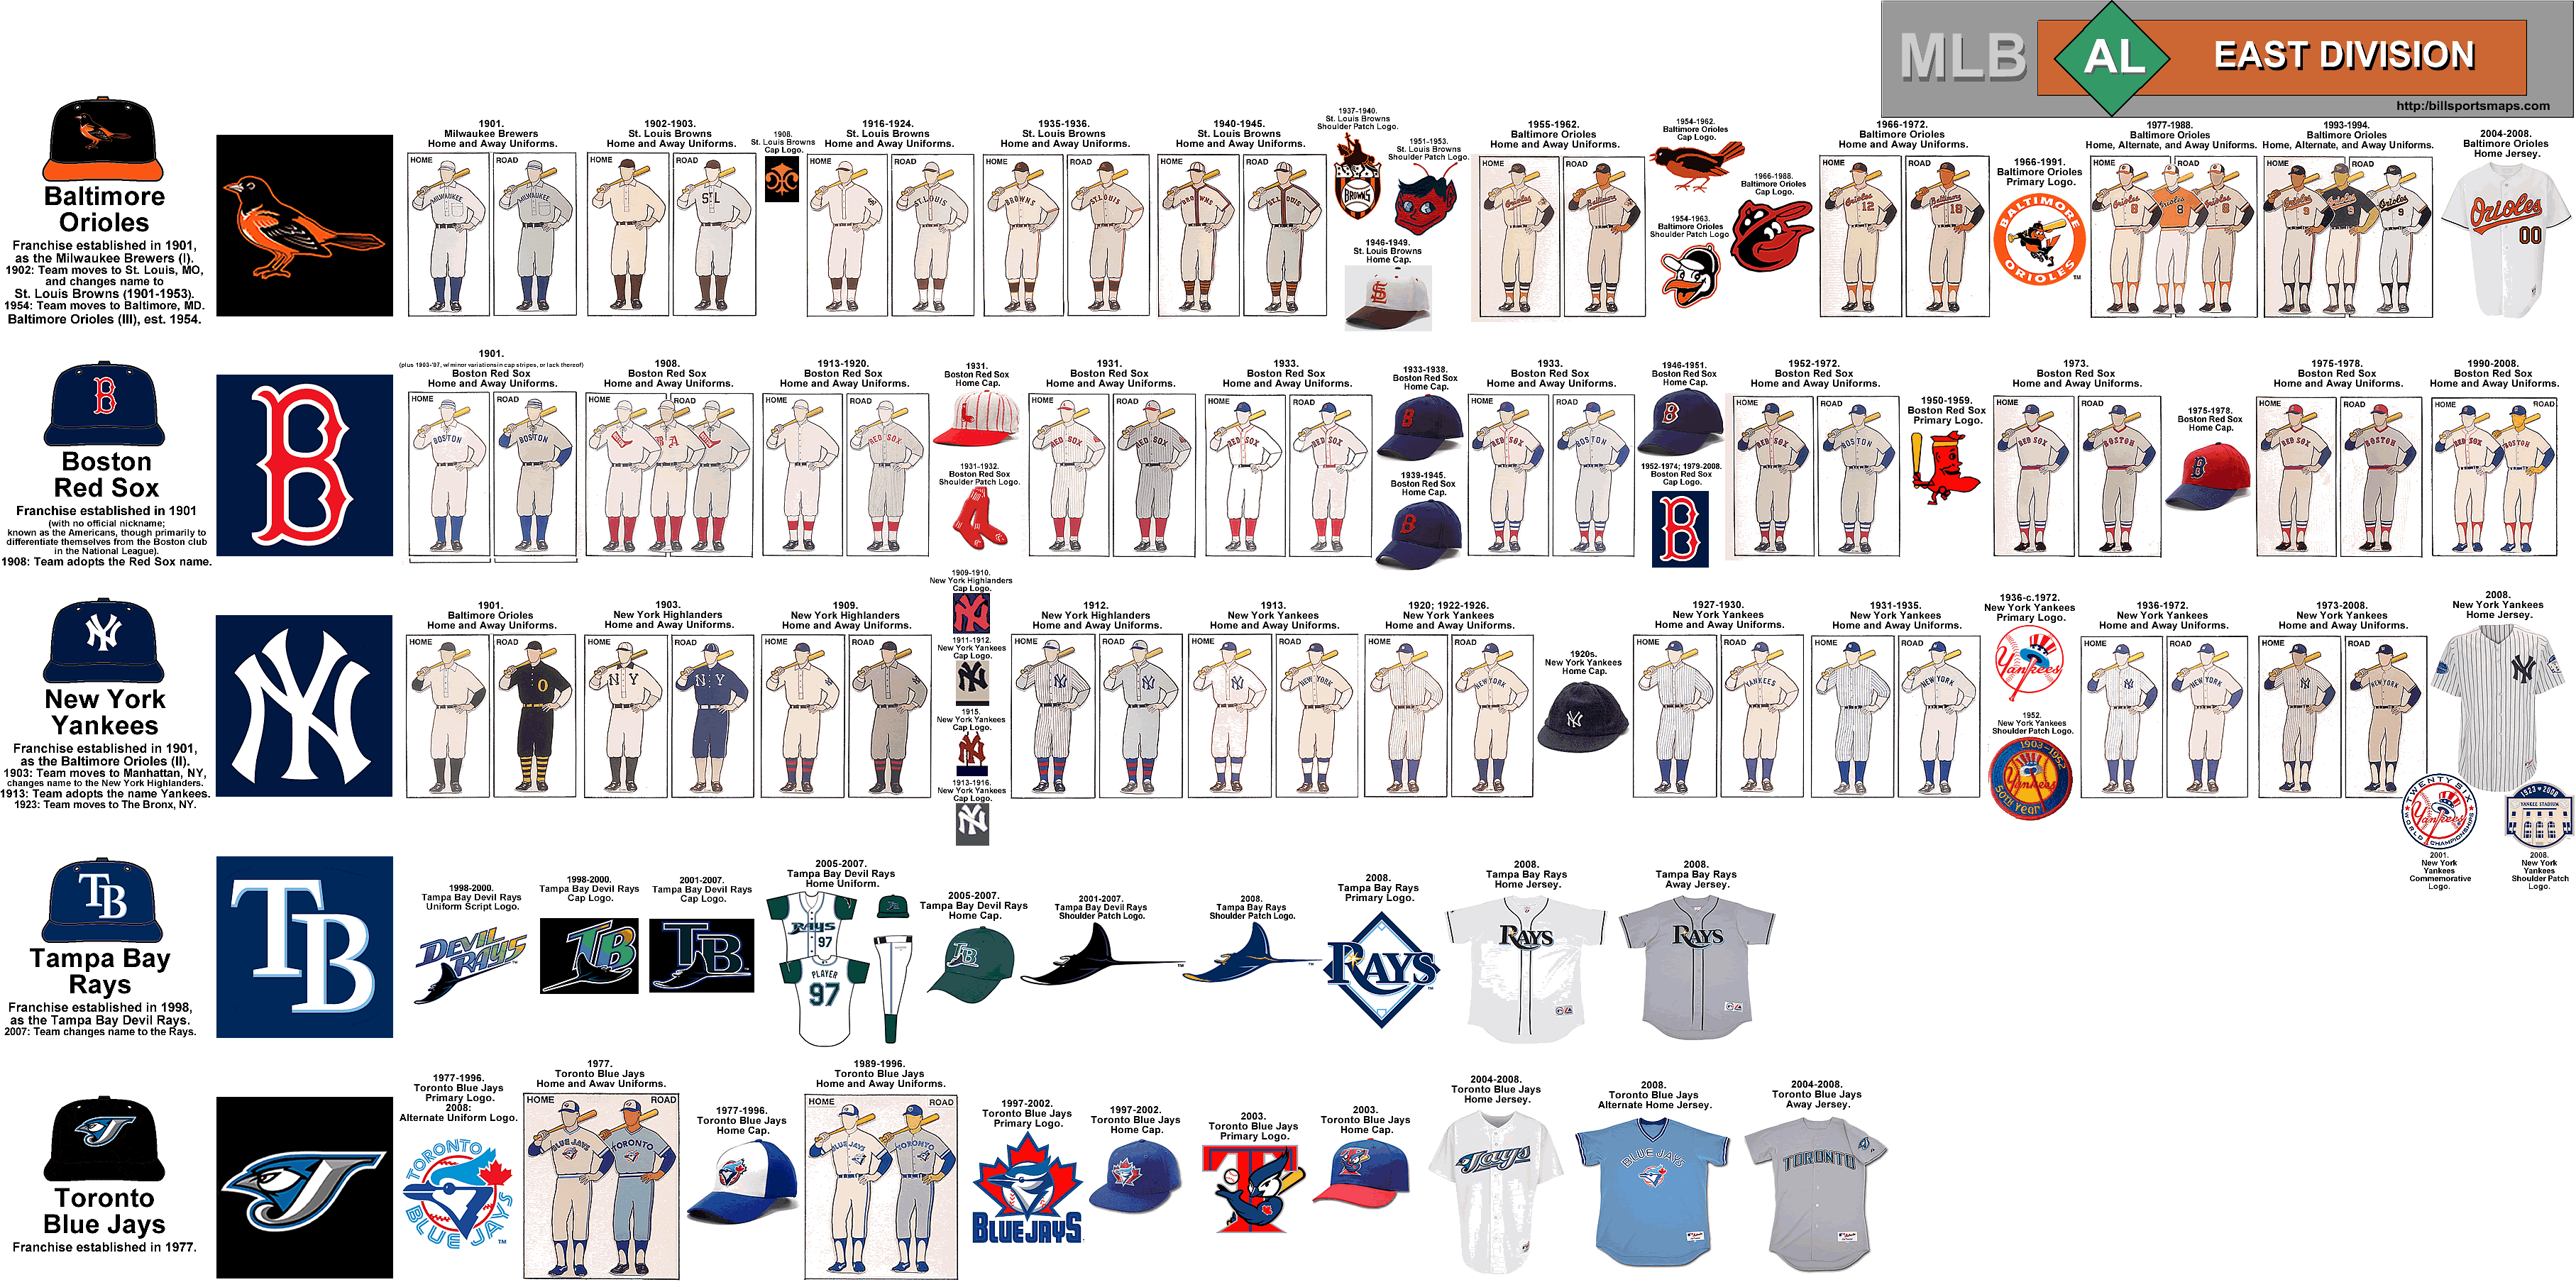 Baltimore Orioles (1901-1902), Pro Sports Teams Wiki